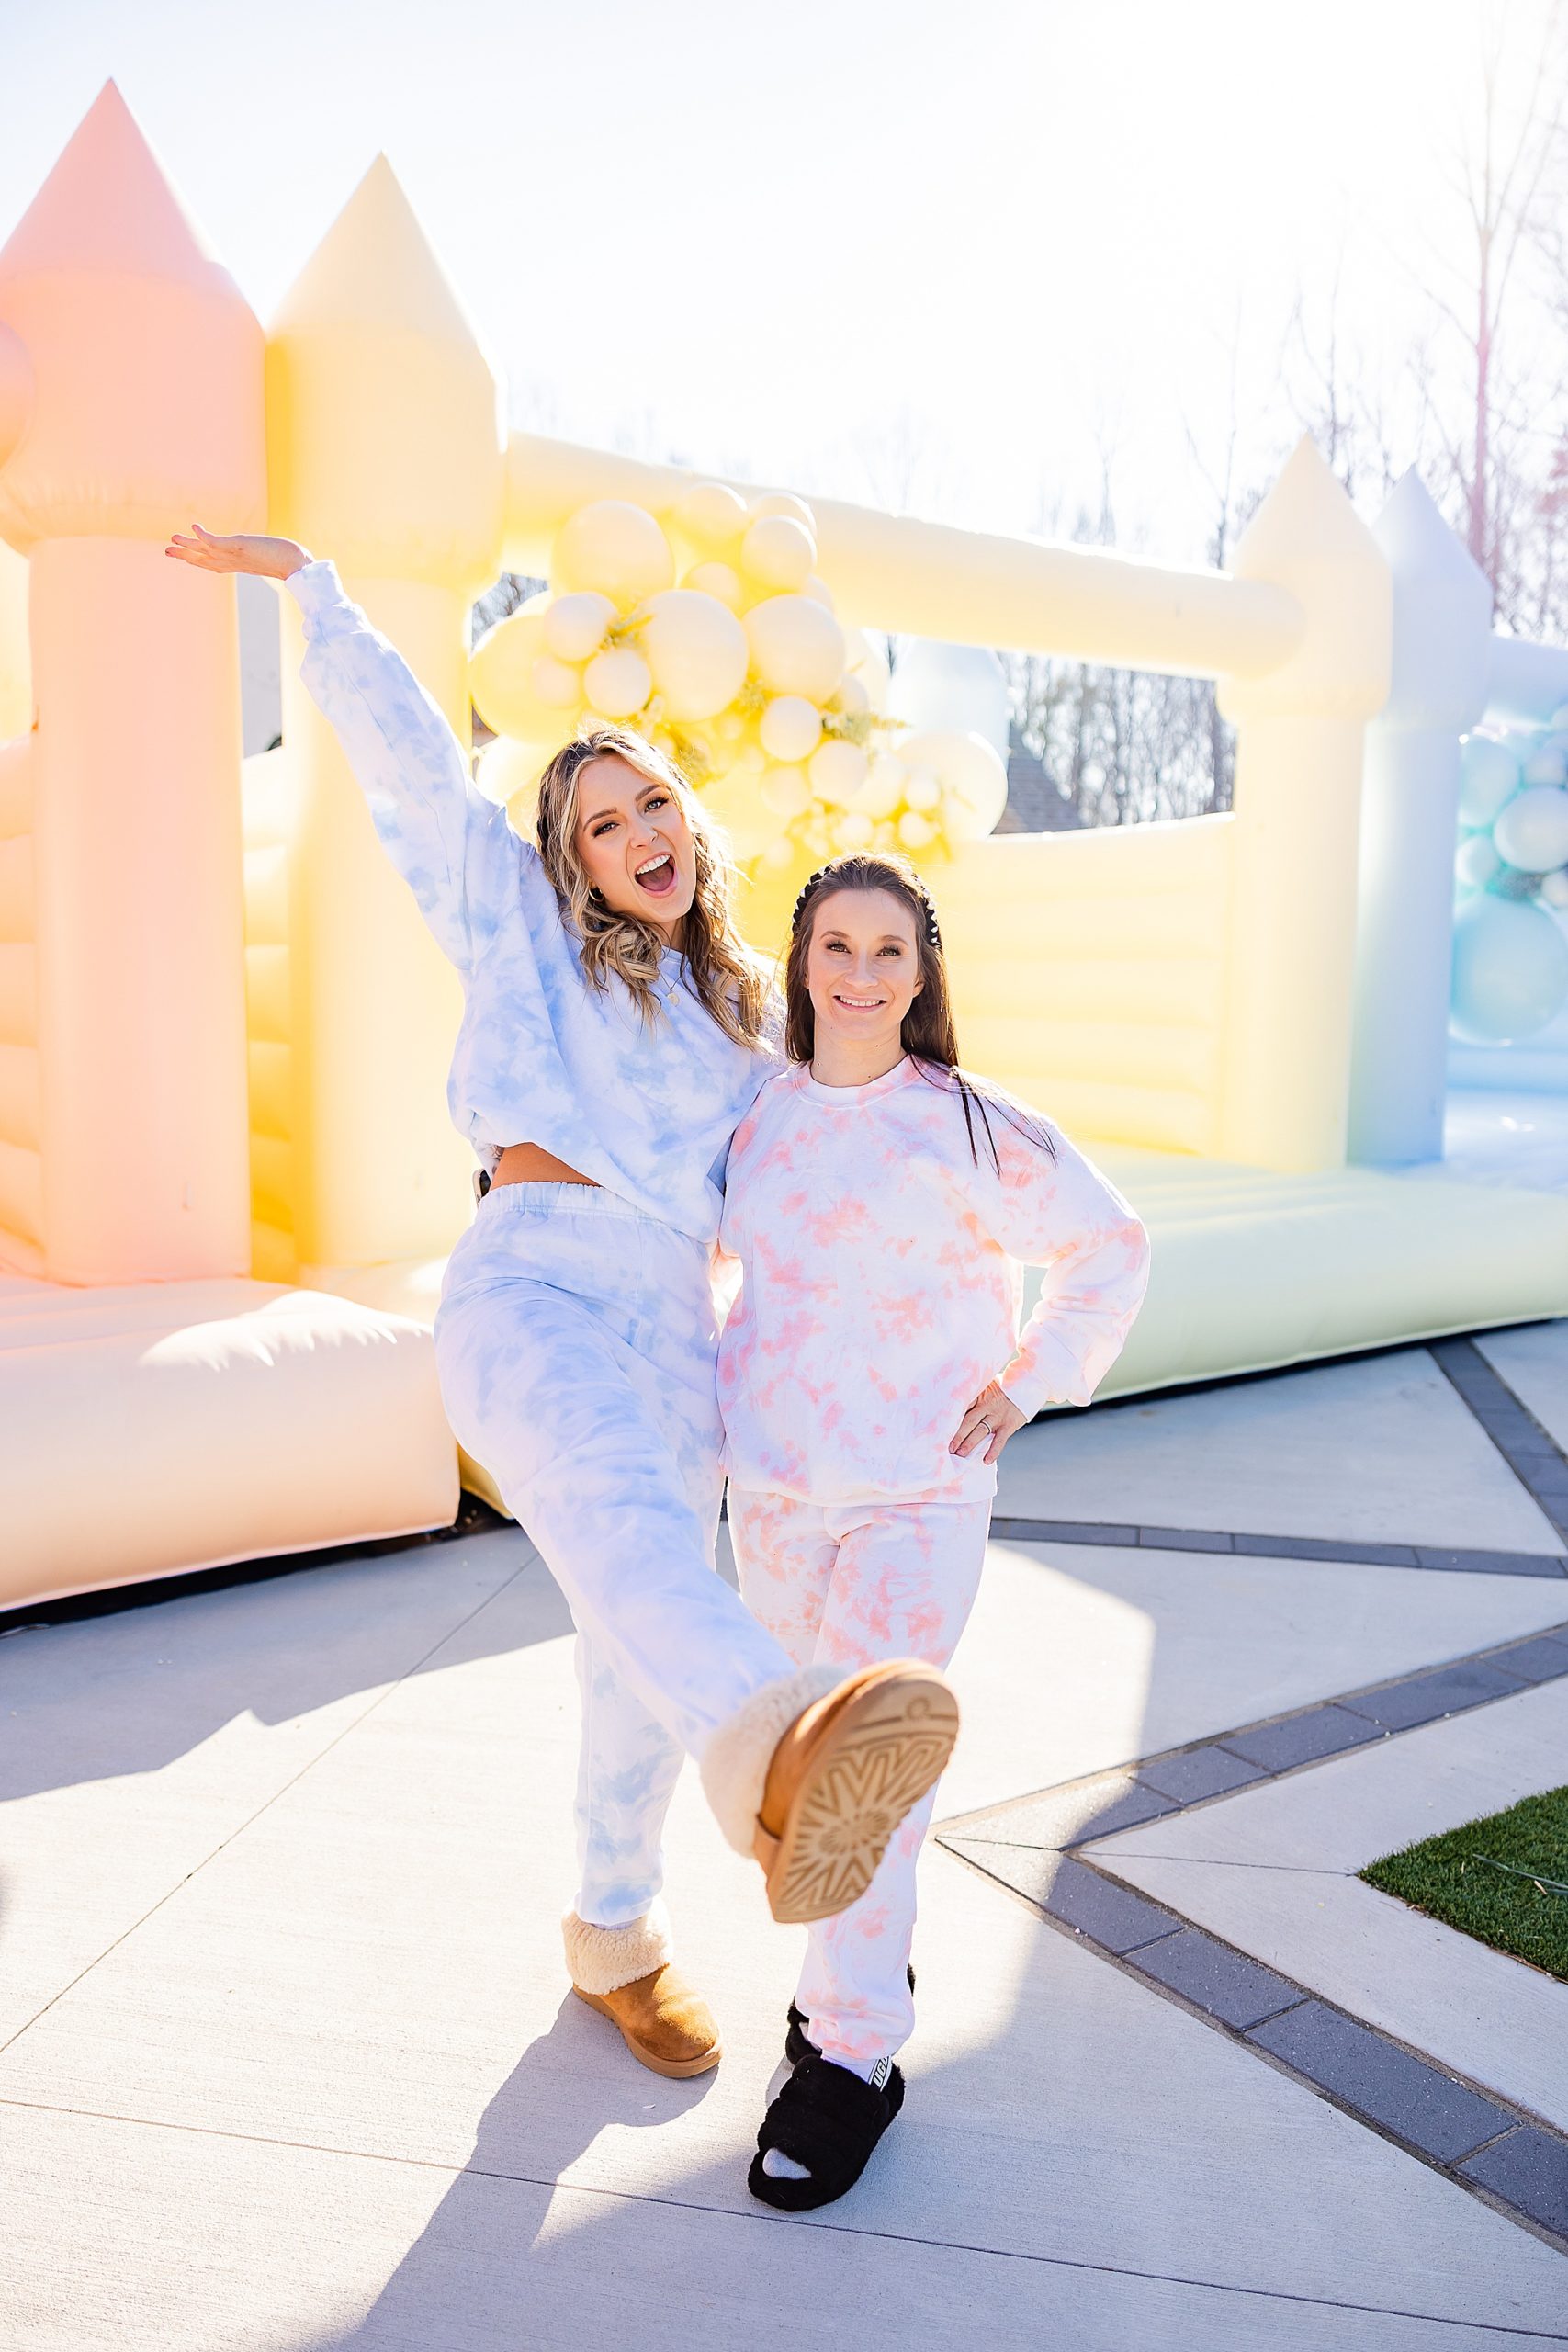 women hug outside pastel bounce houses for launch photo shoot